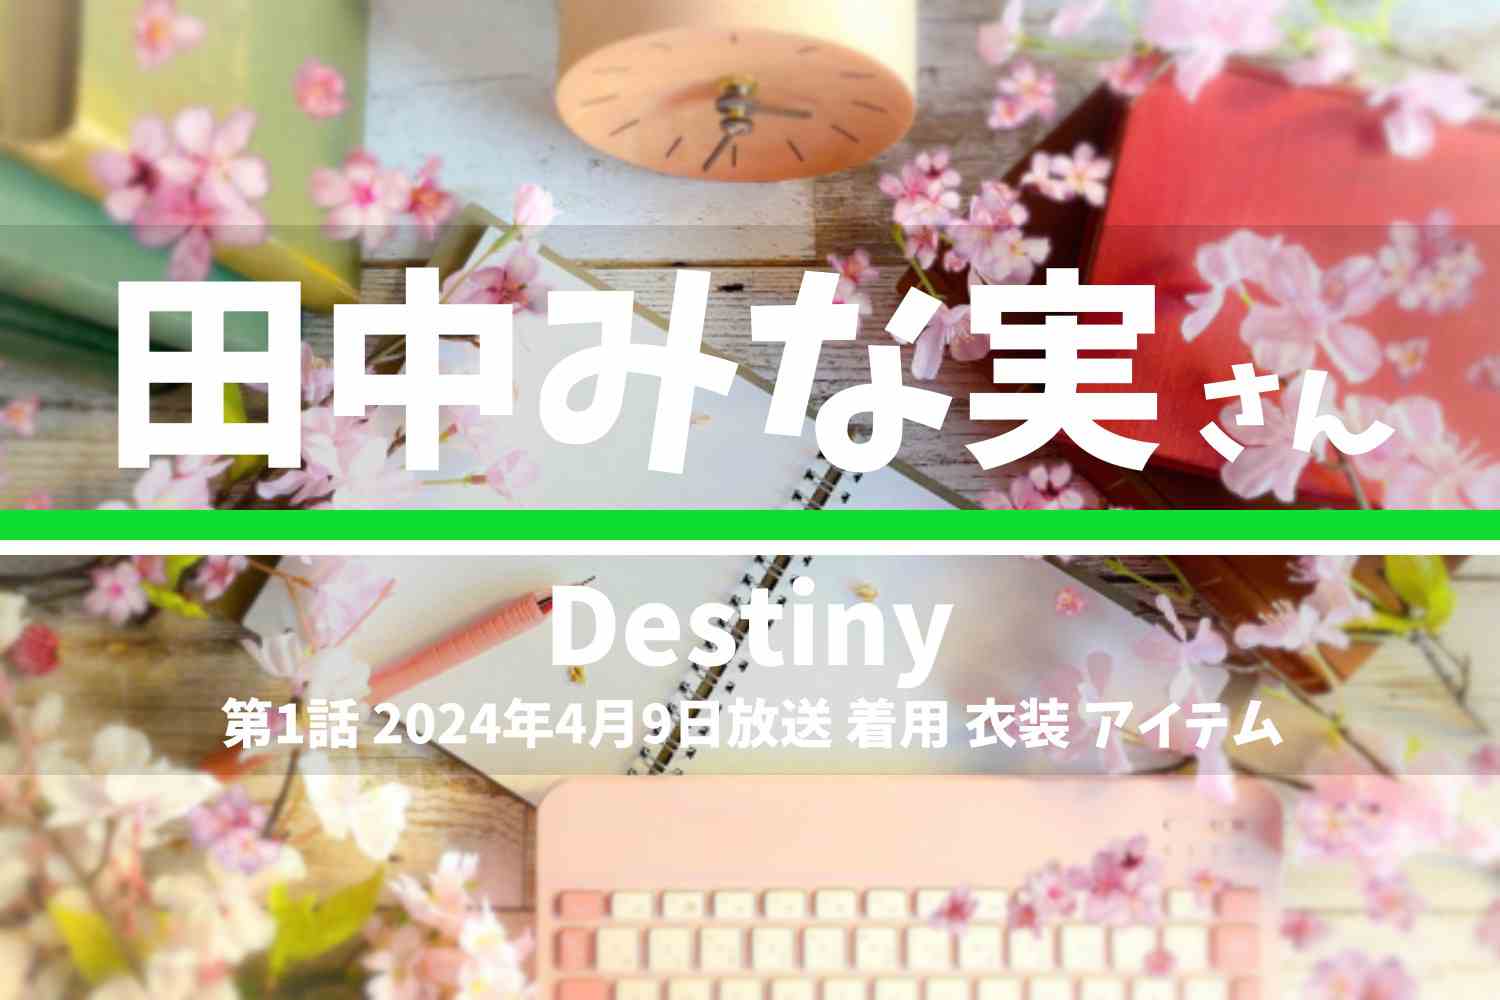 Destiny 田中みな実さん テレビドラマ 衣装 2024年4月9日放送